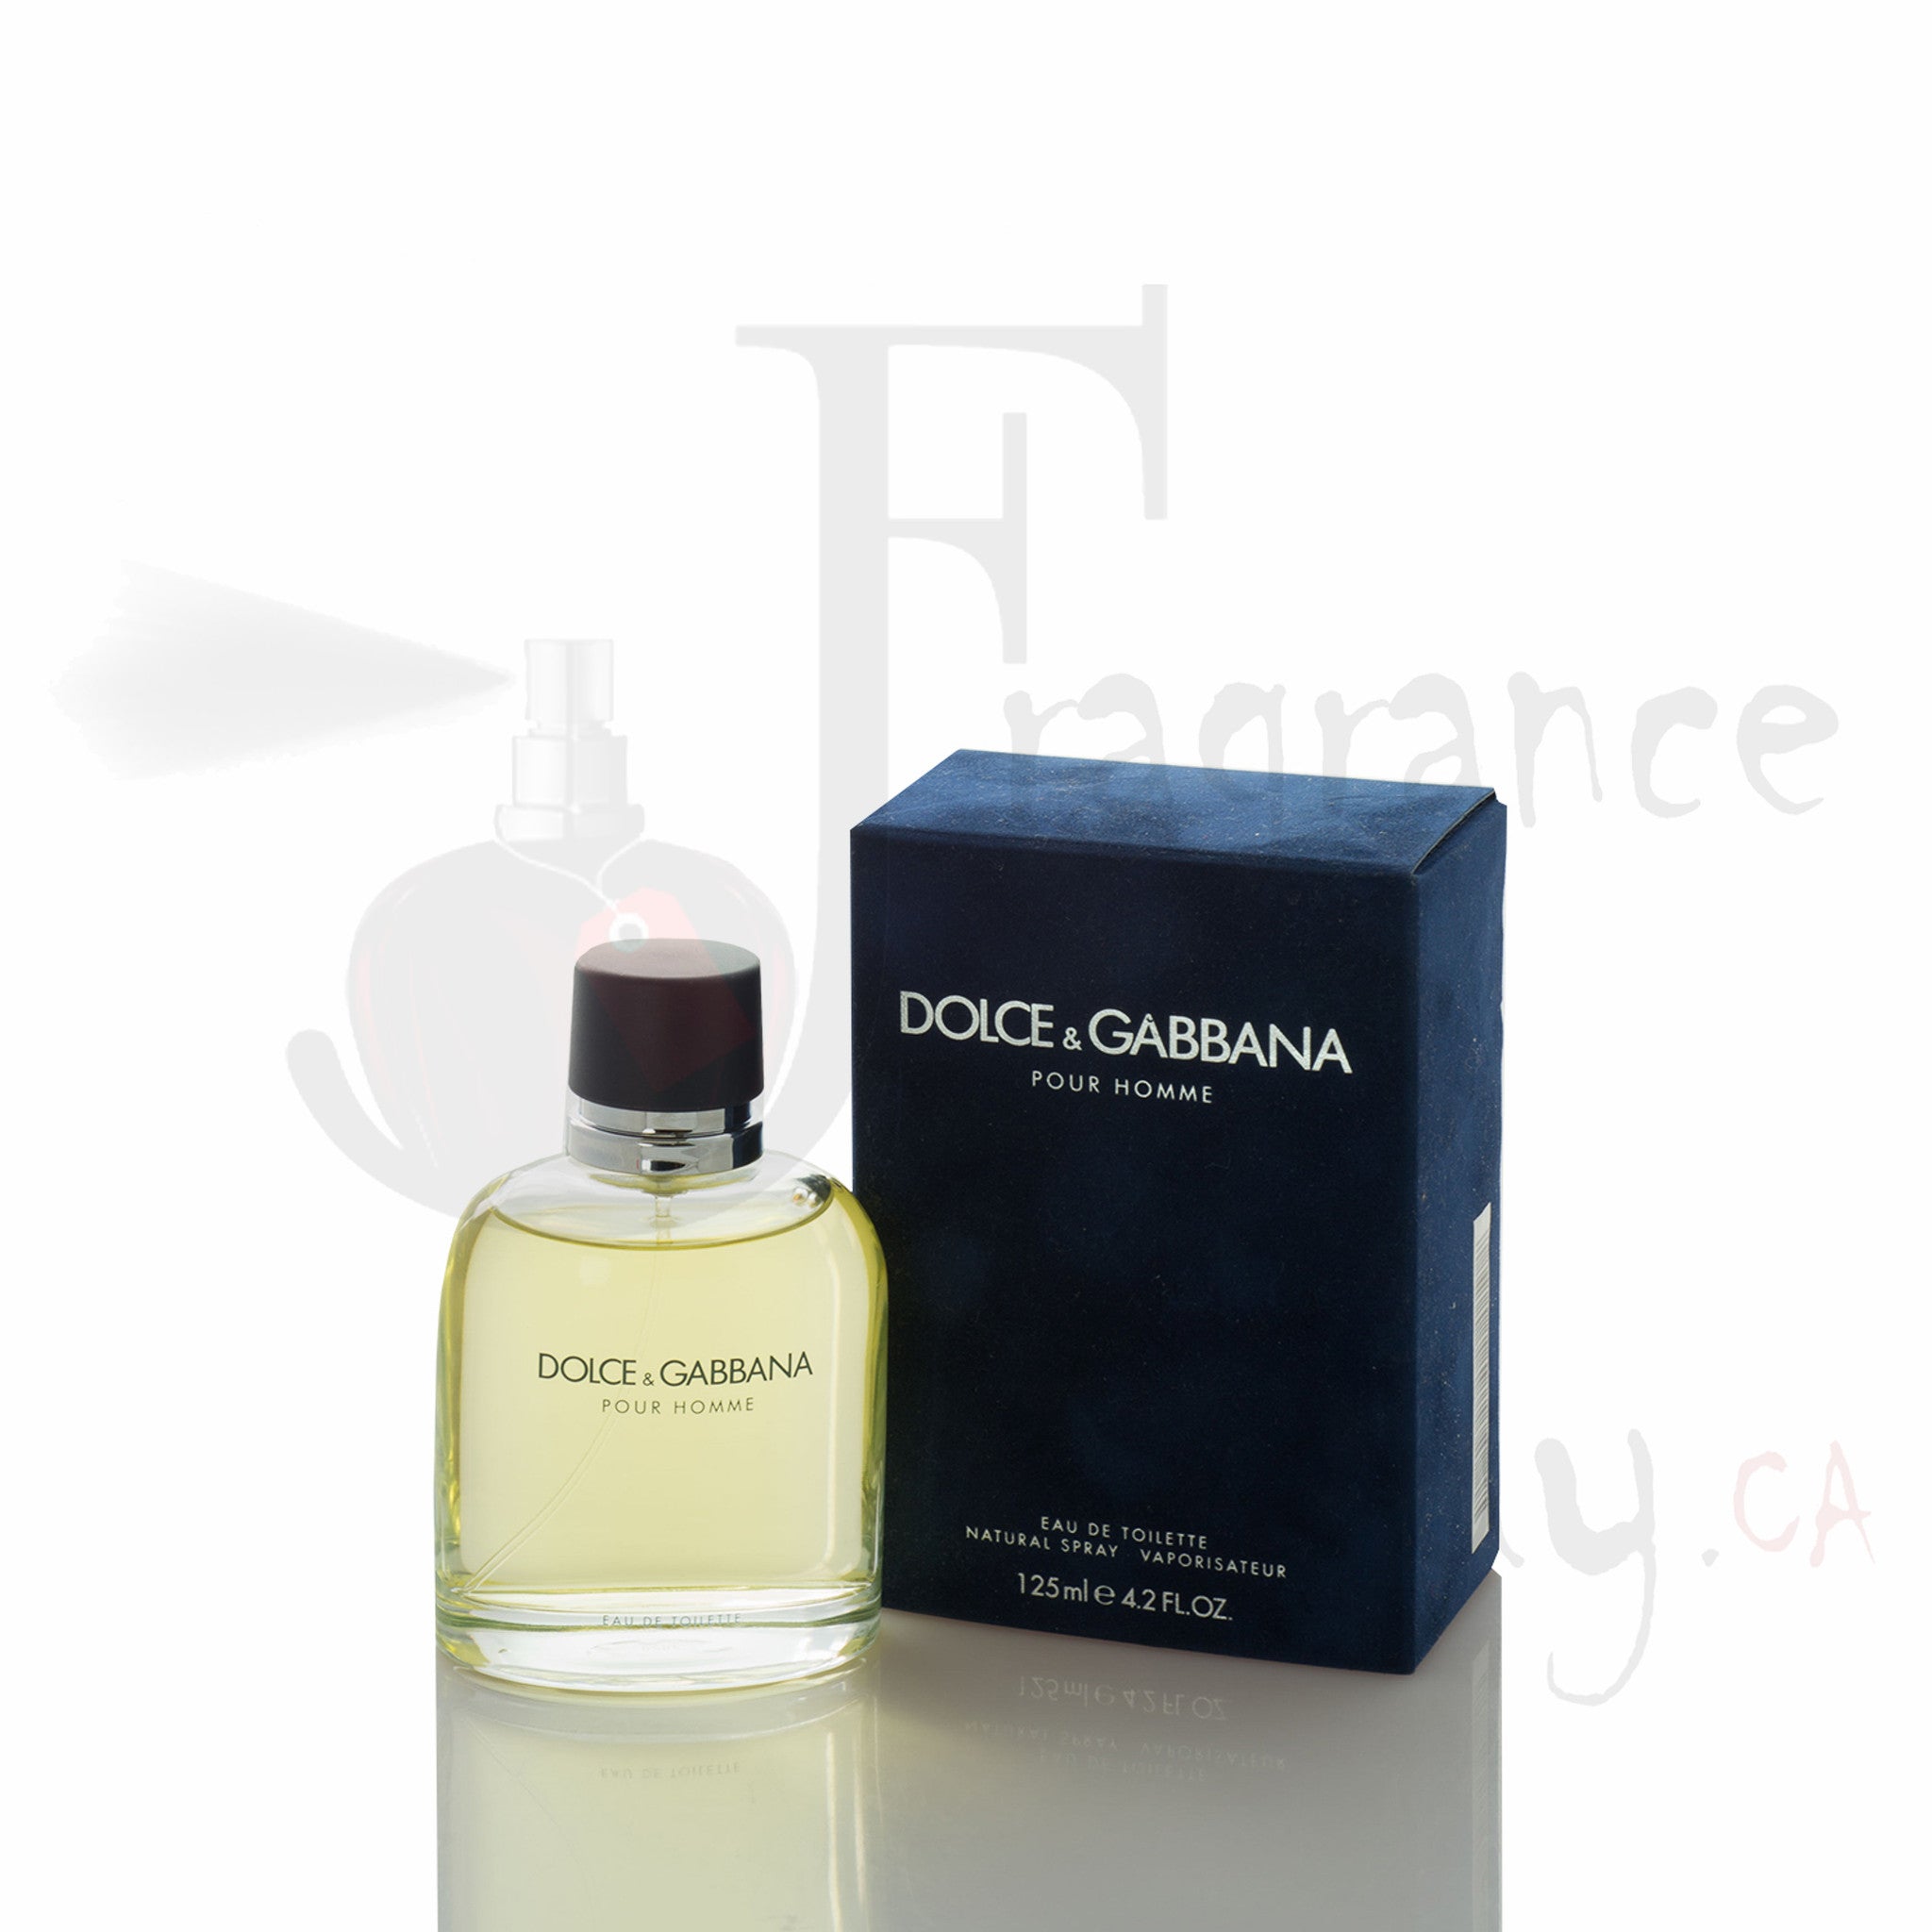  — Dolce & Gabbana Homme Classic Man Cologne | Online Sale  Fragrance Buy